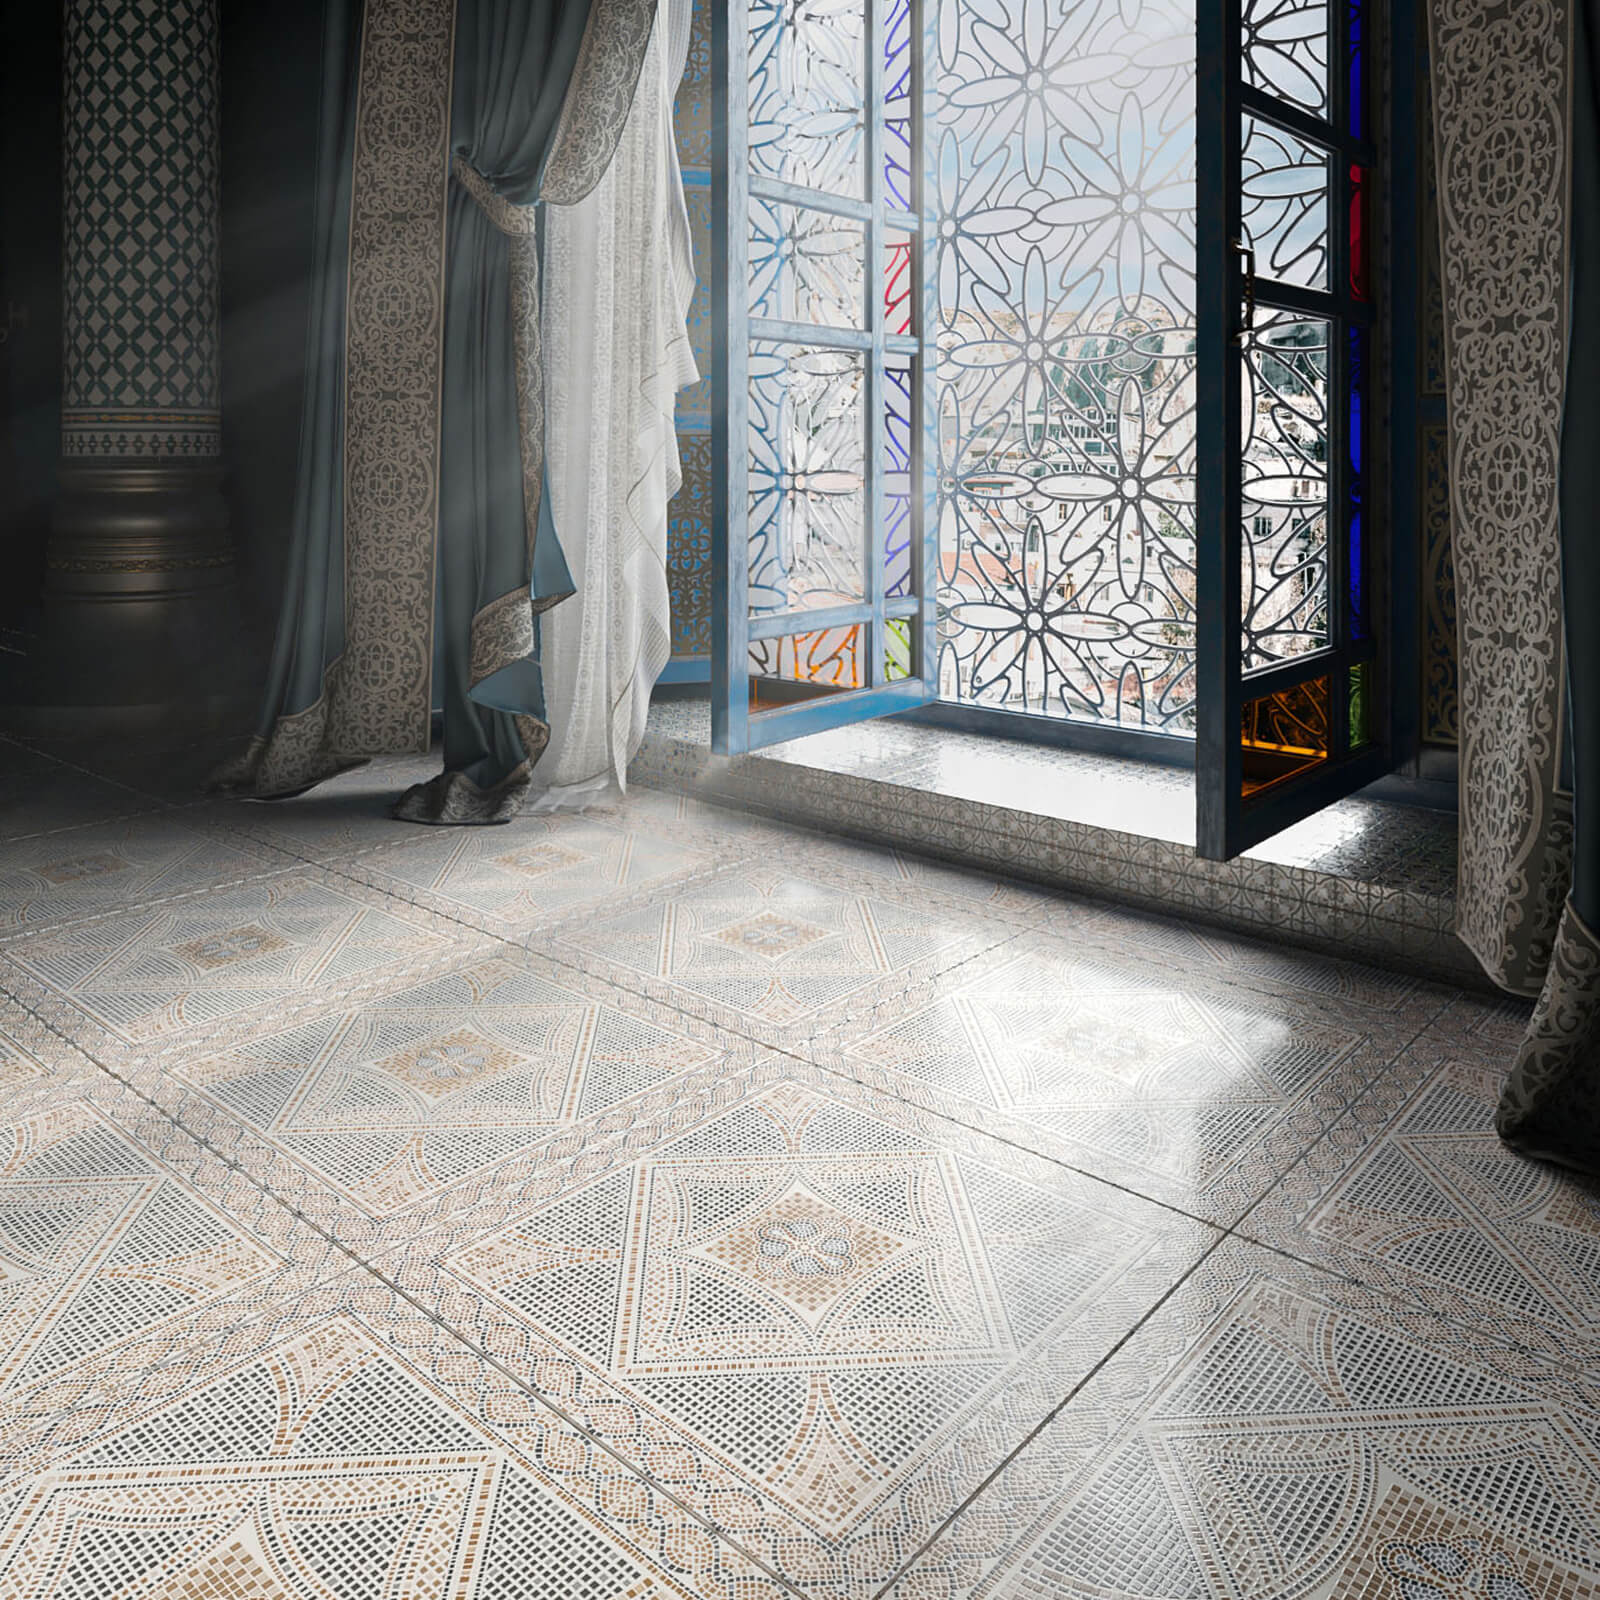 3D Visualization of Gorgeous Ornate Floor Tiles